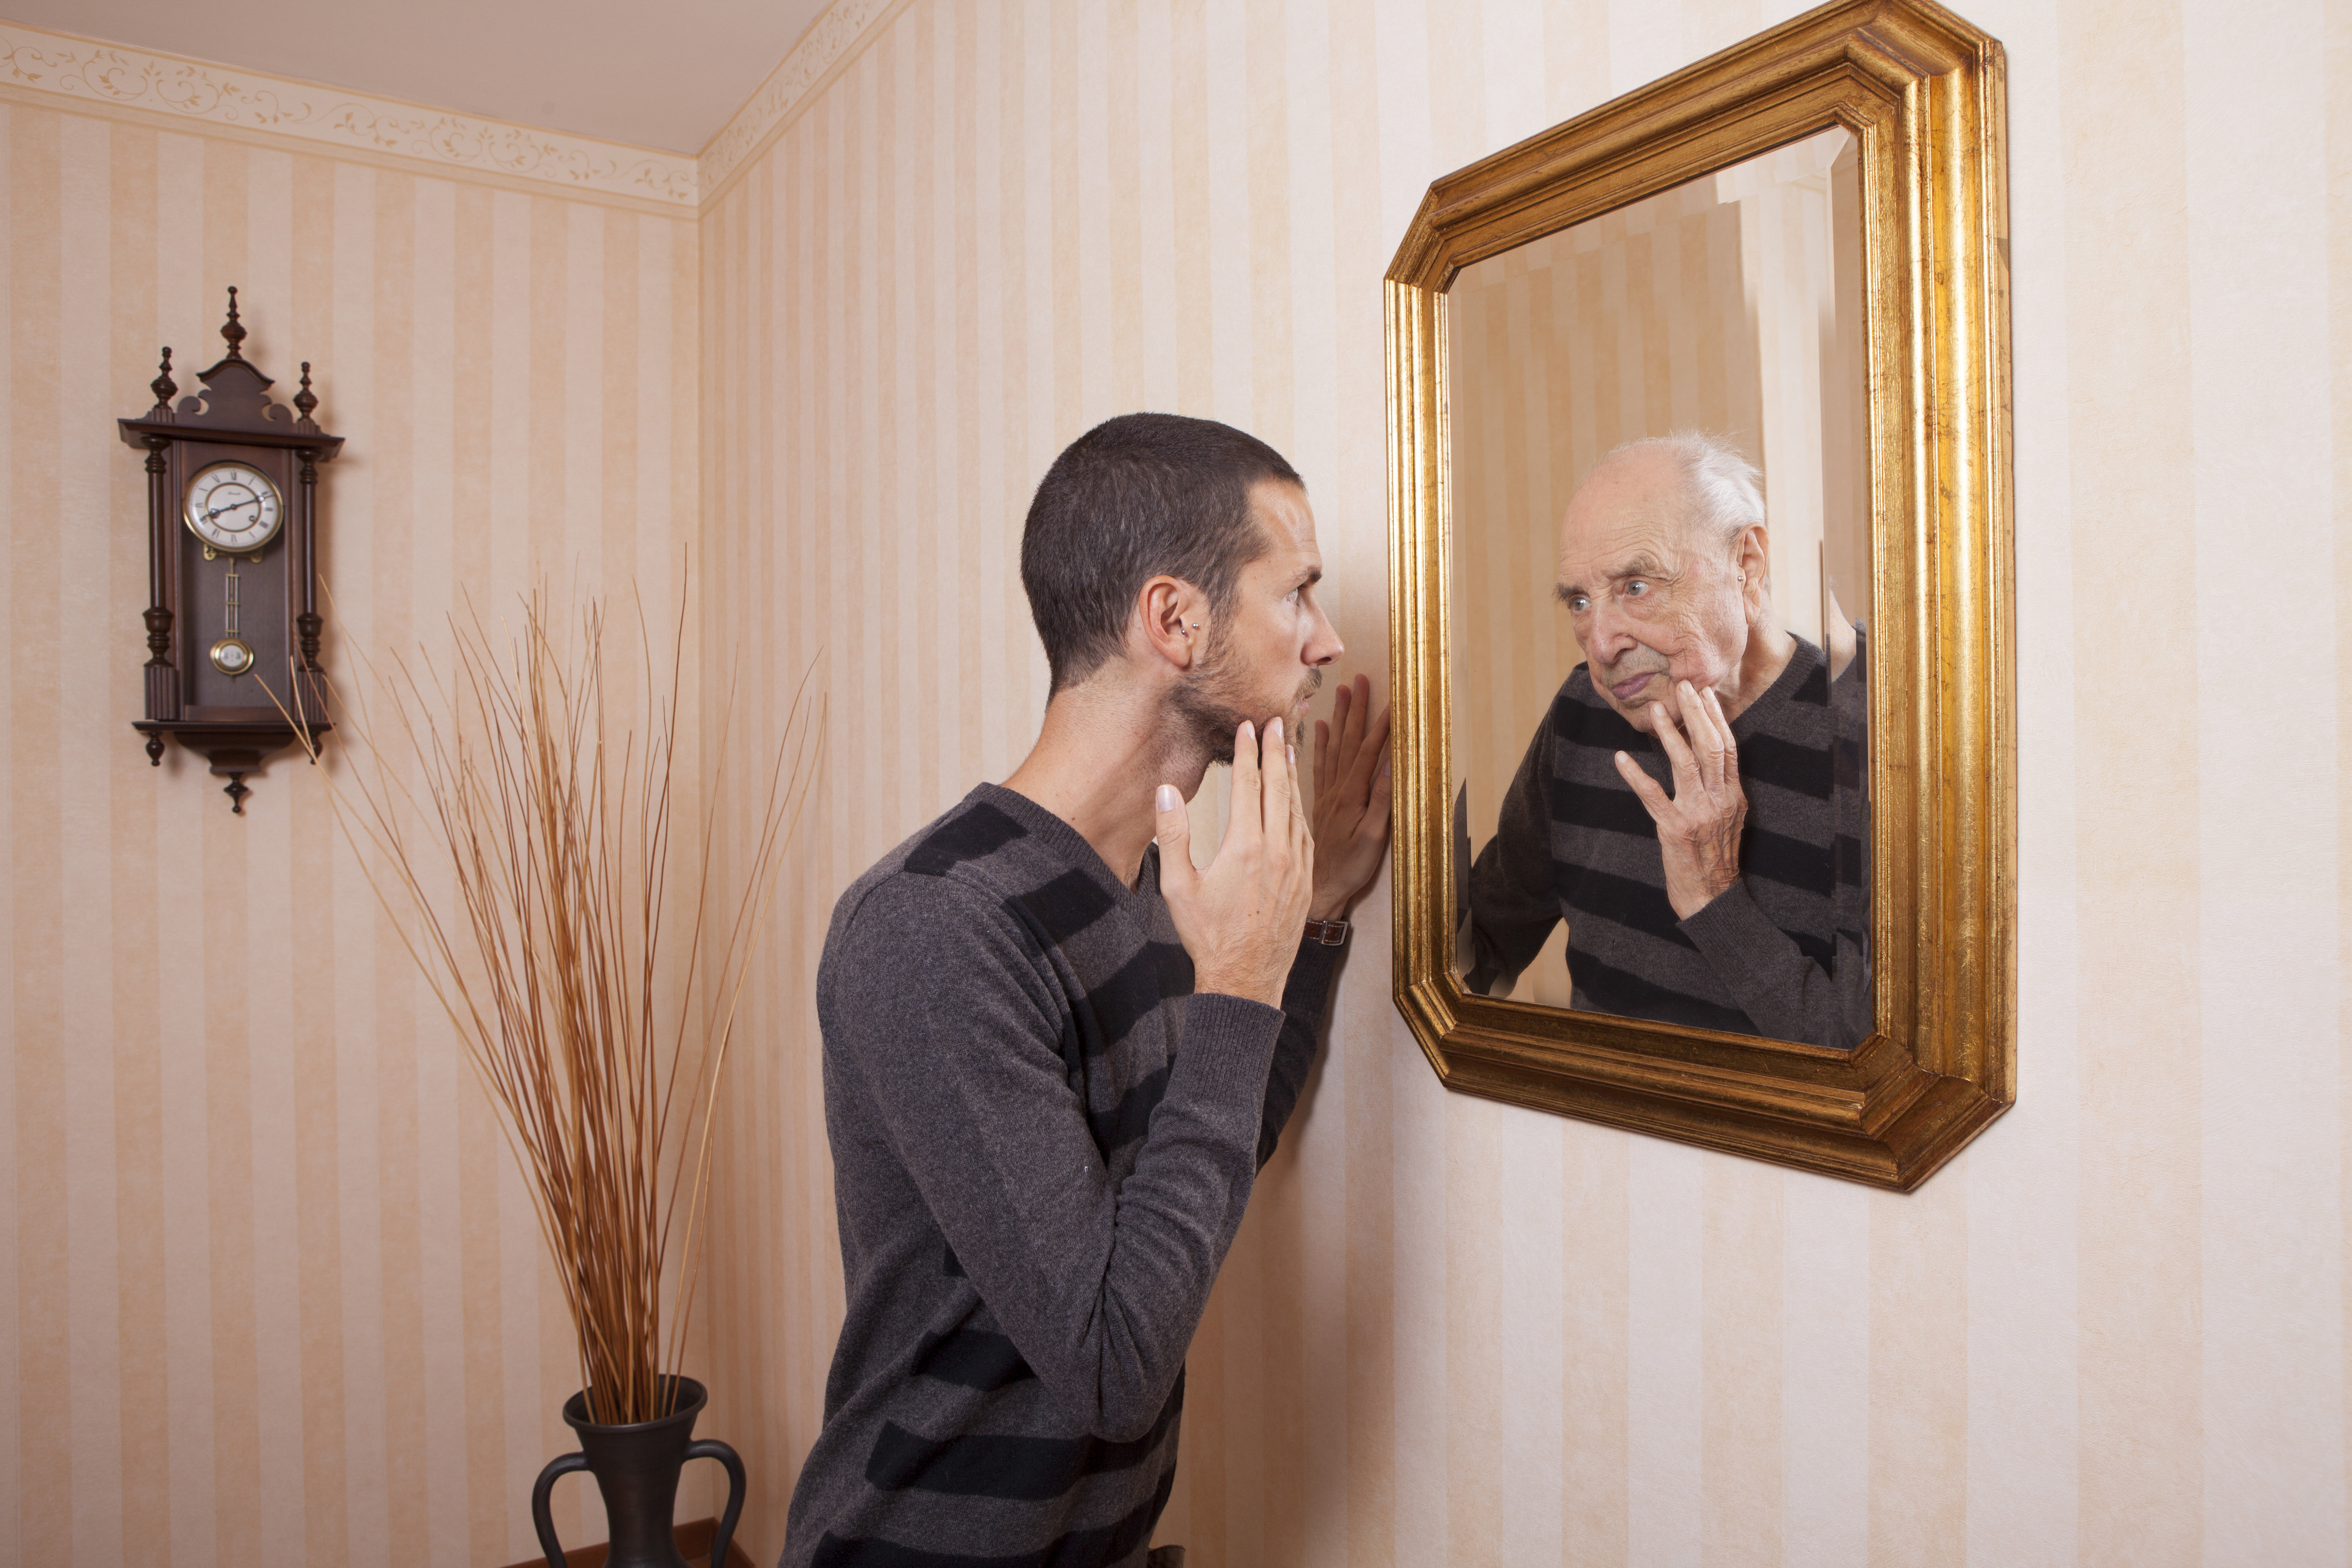 Old Man Mirror Reflection - Photo Editing with PicsArt